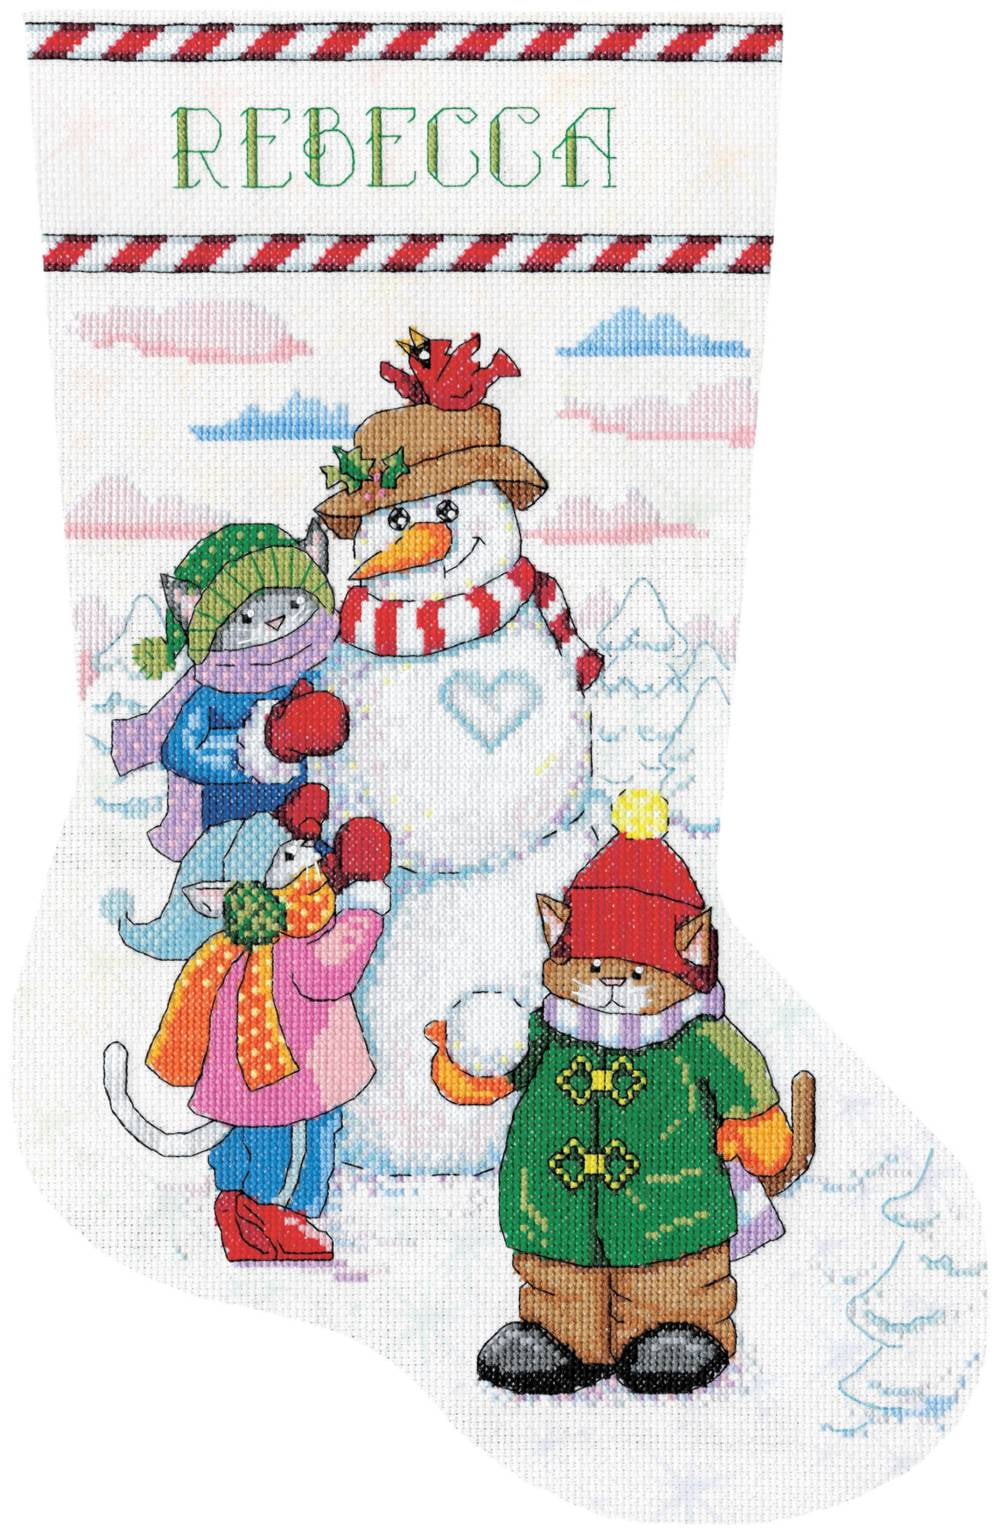 Design Works Counted Cross Stitch Stocking Kit 17 Long-Skiing Santa